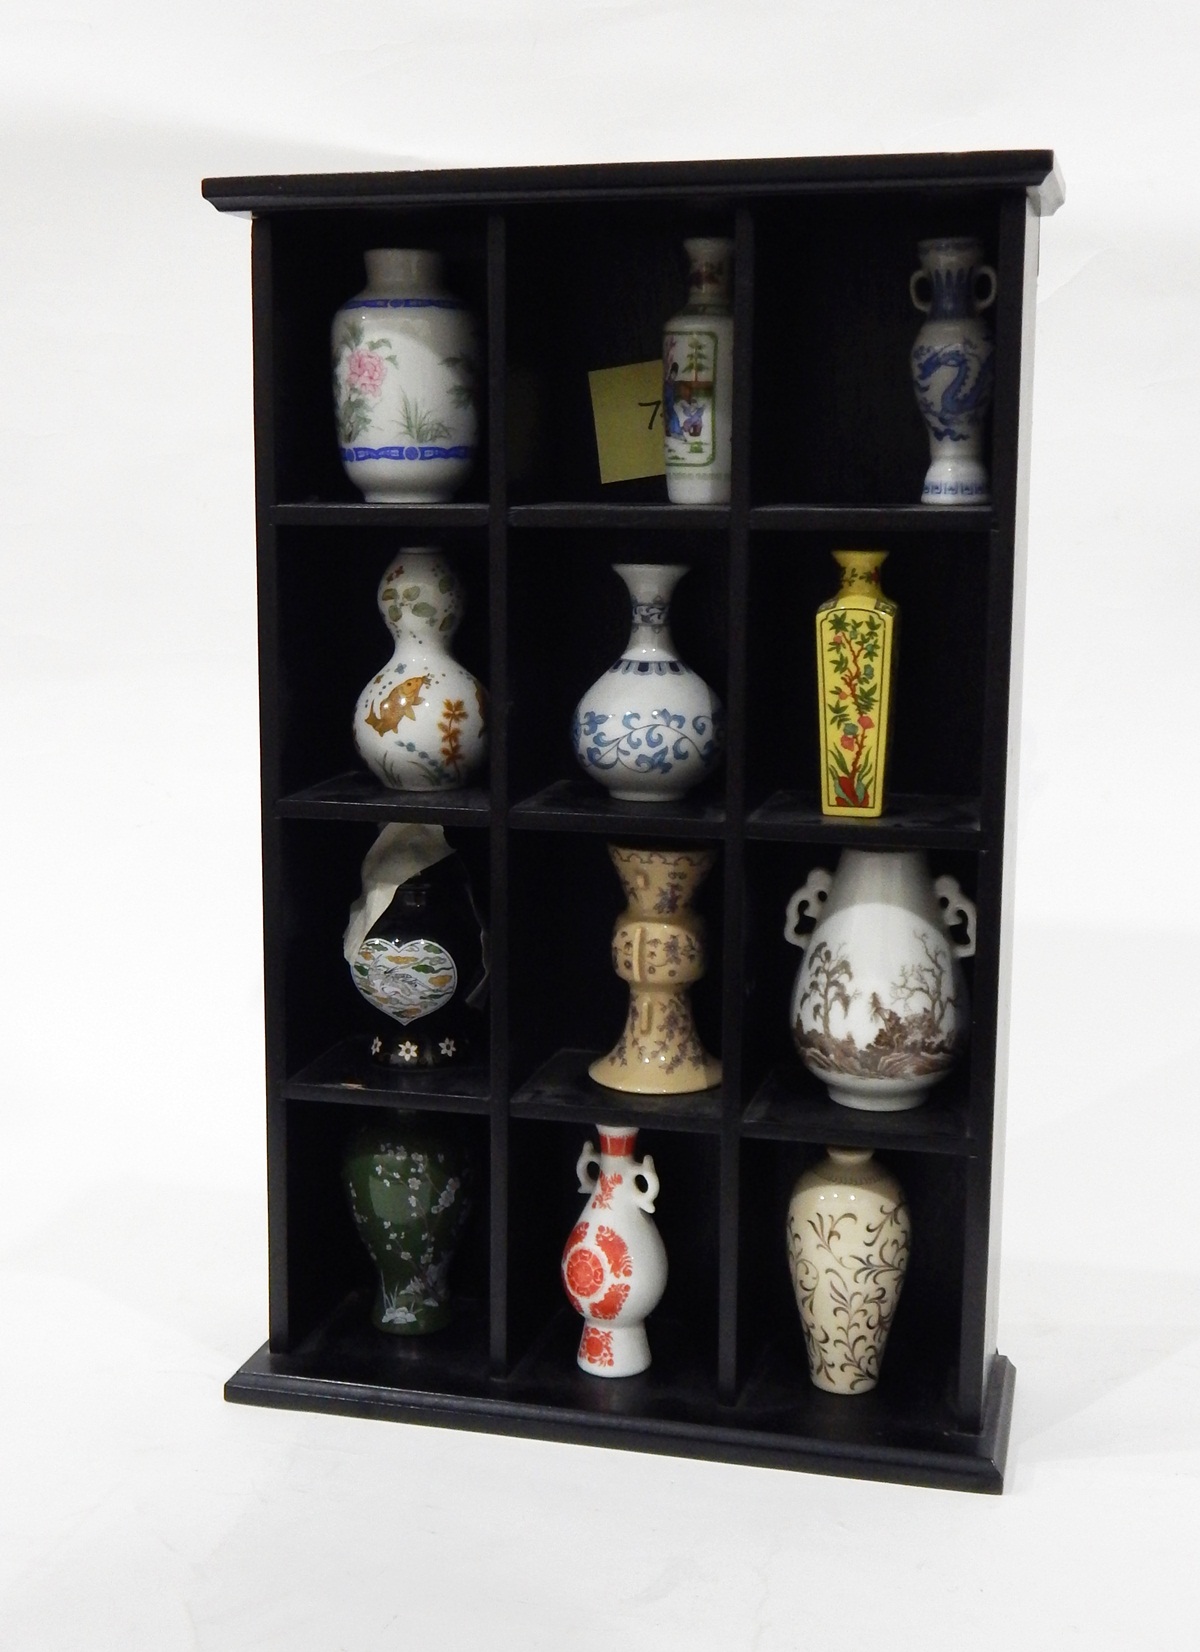 Black collectors shelf unit and contents of 12 modern Japanese miniature porcelain vases